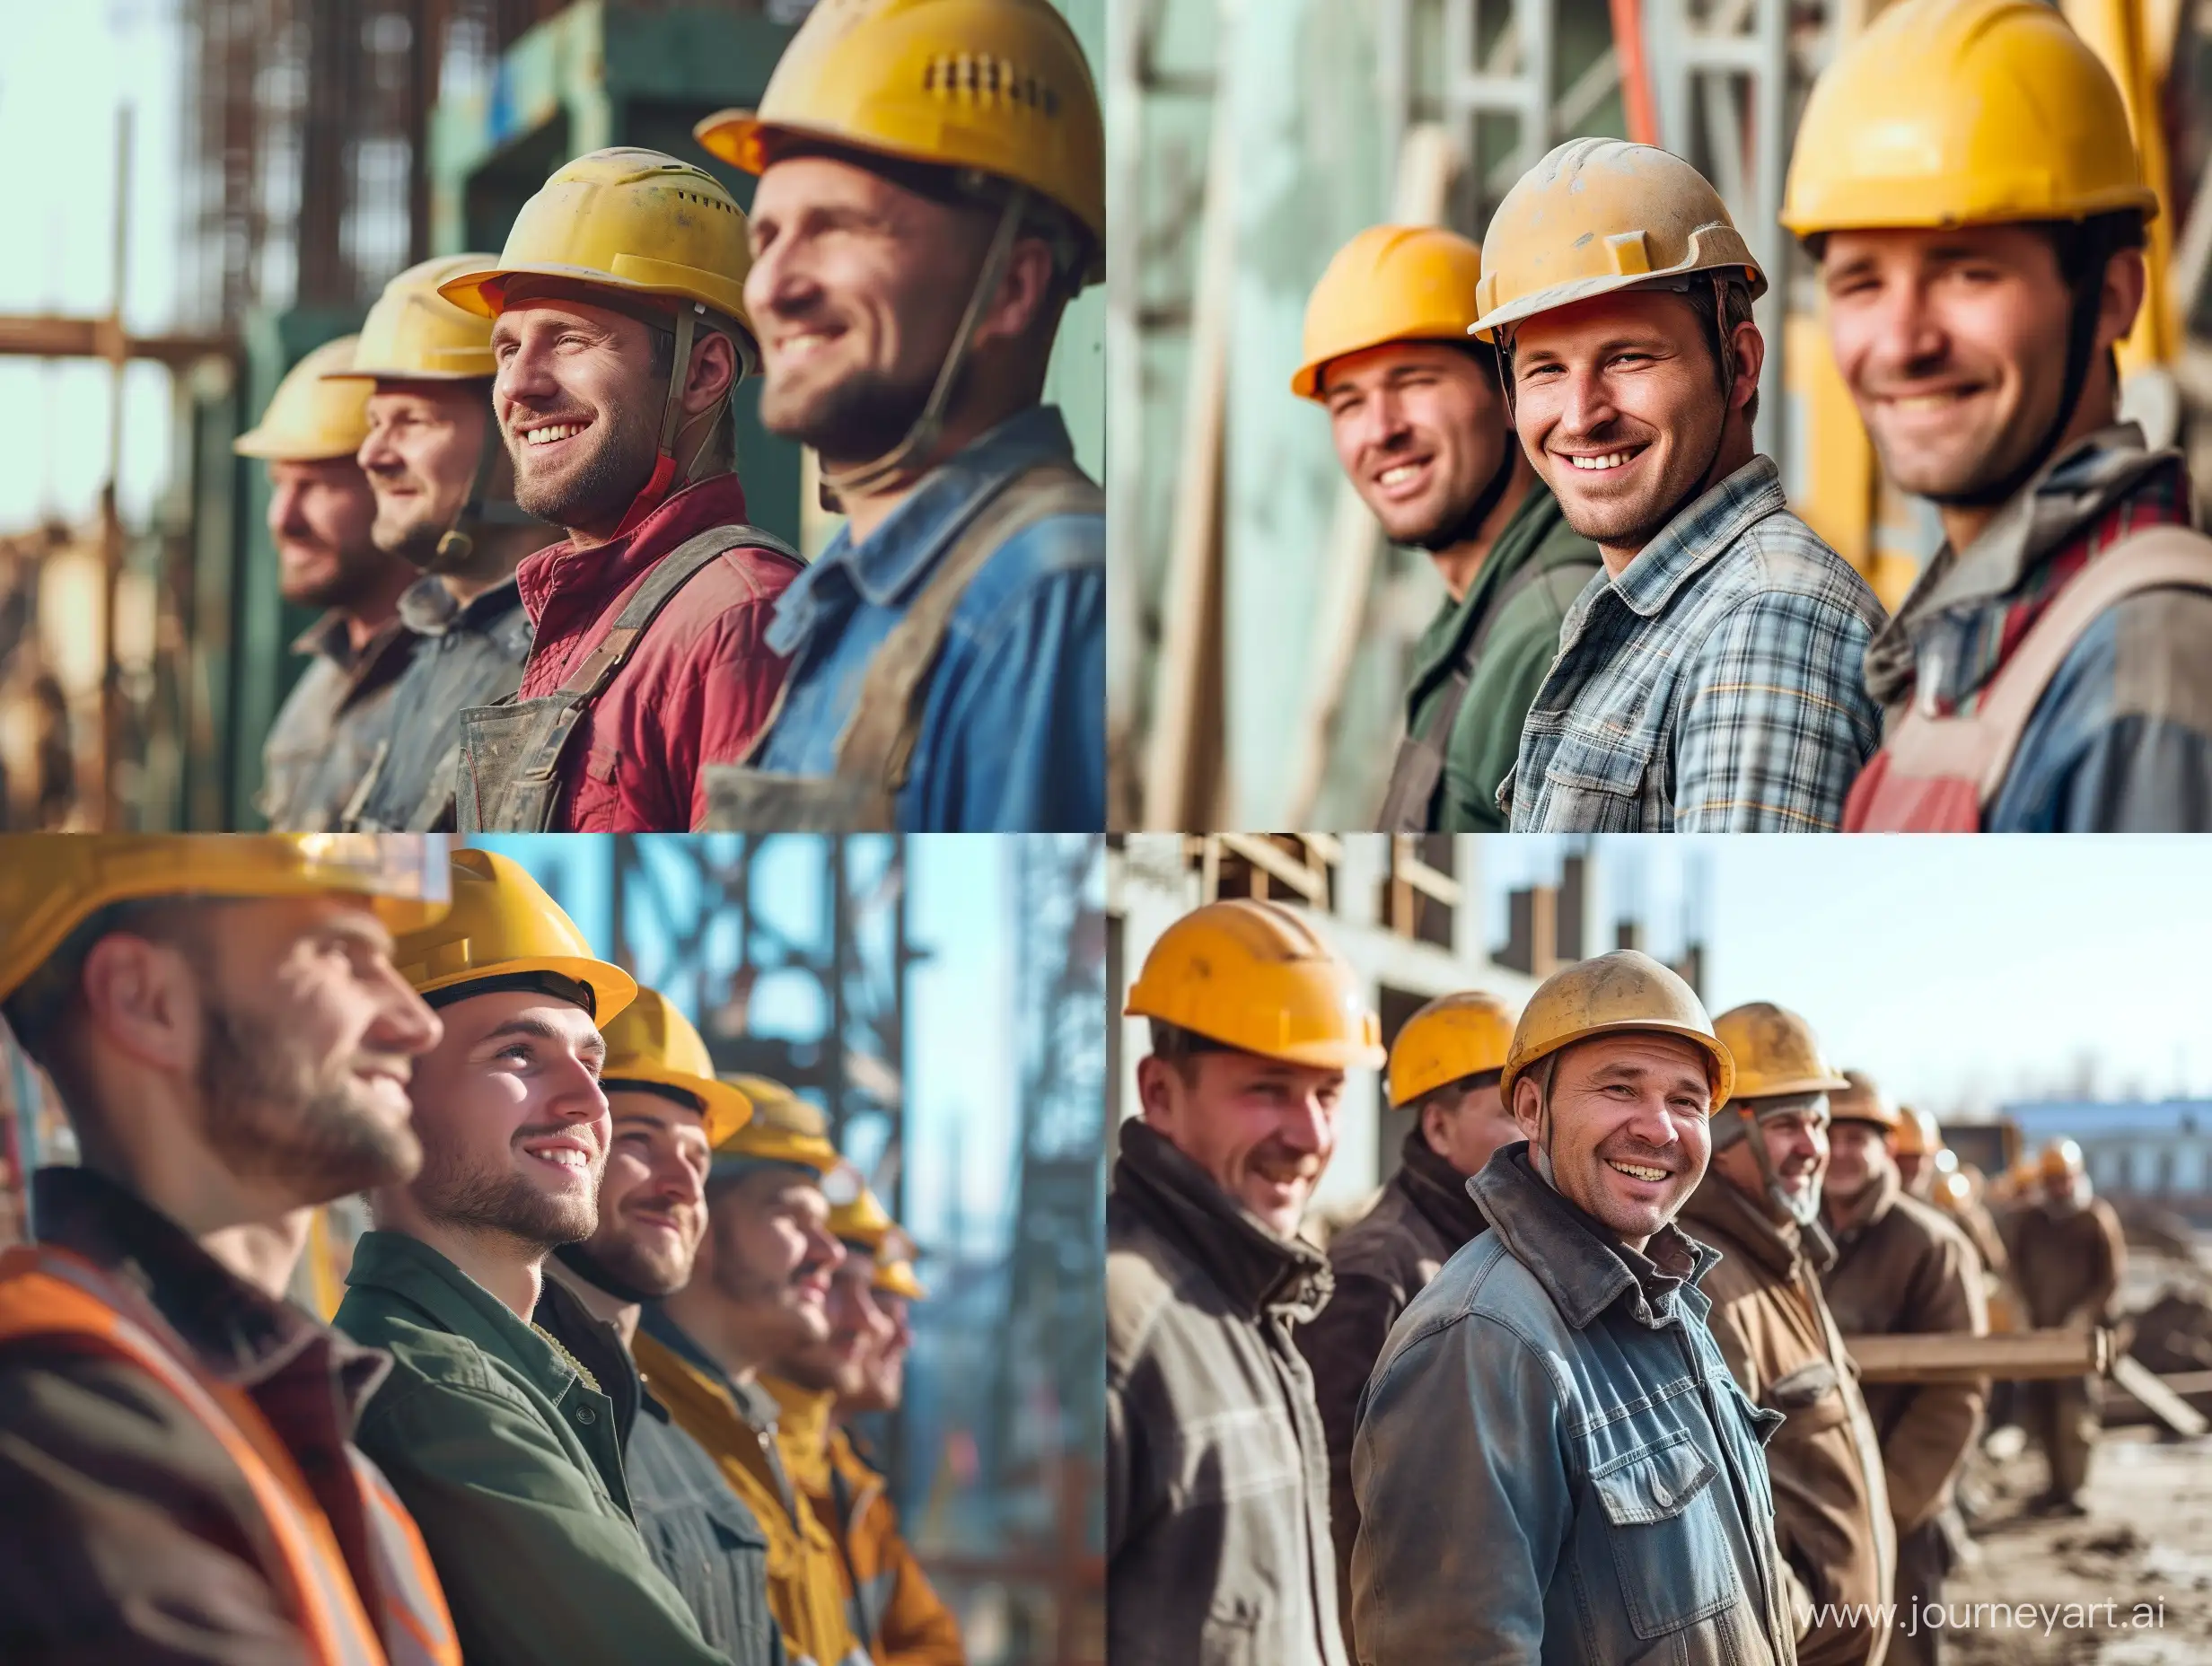 Joyful-Construction-Workers-in-Helmets-Under-Russian-Sunshine